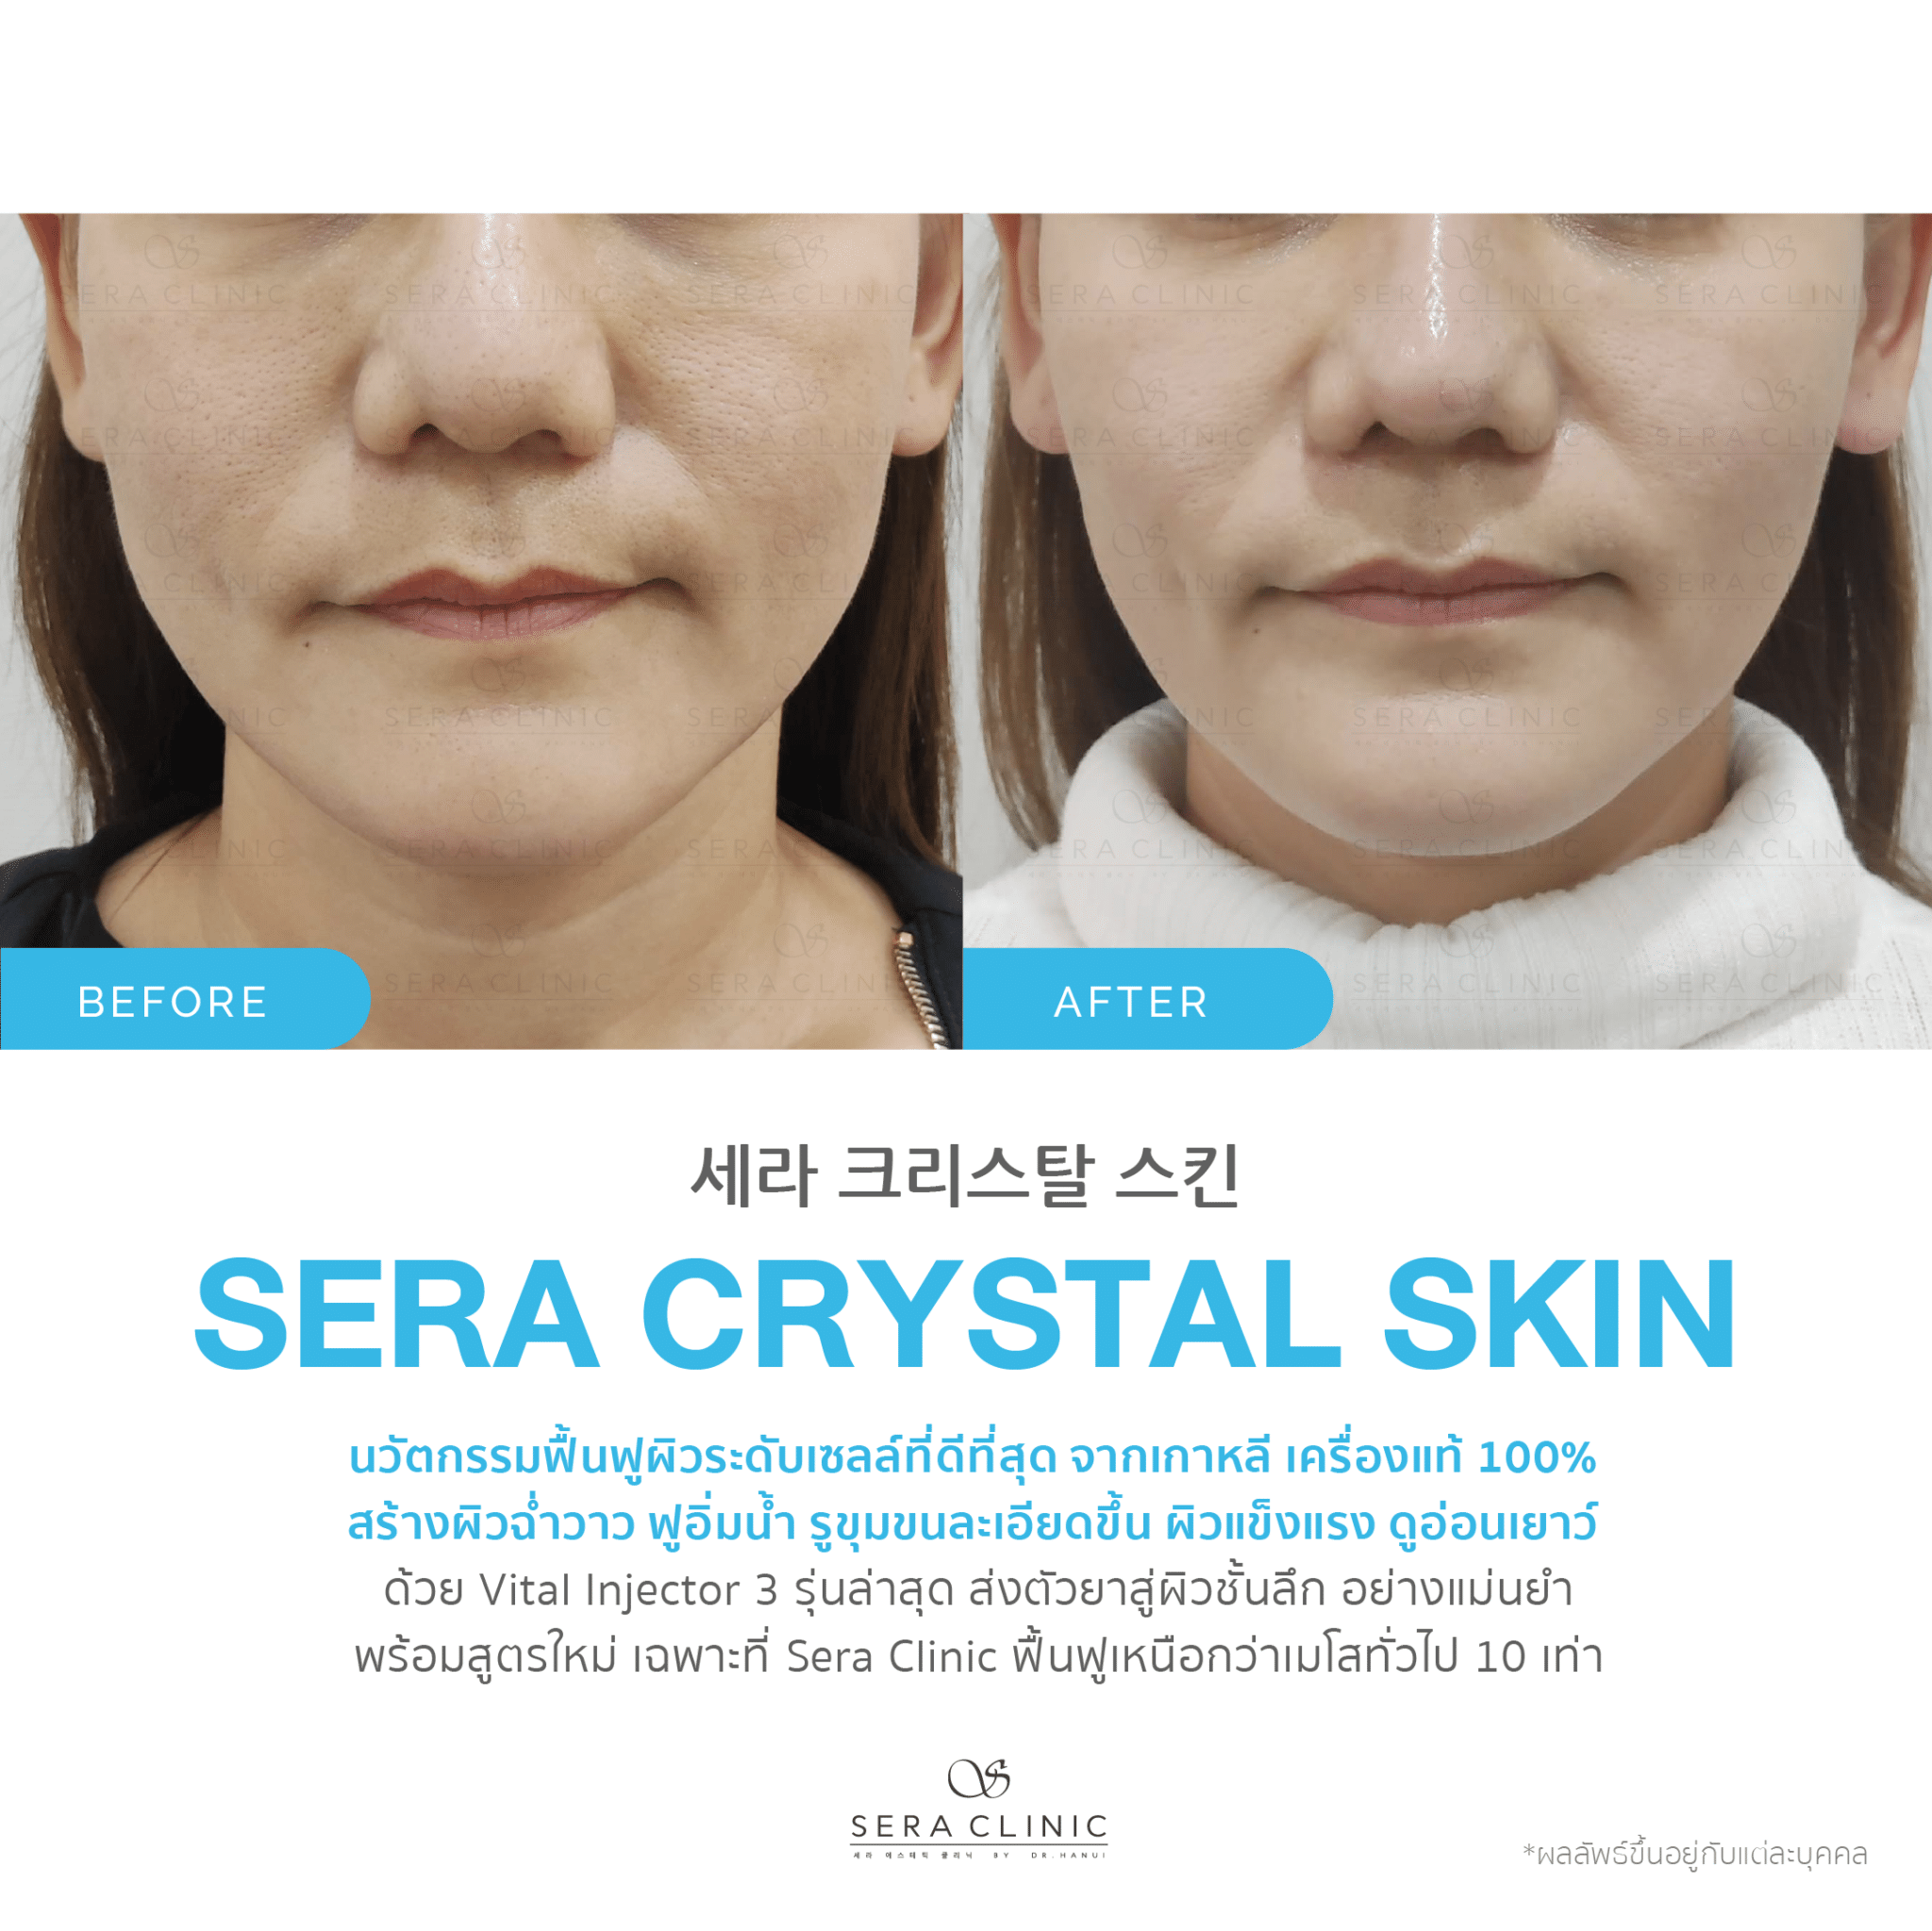 review รีวิว เซราคลินิก Sera Clinic Sera Crystal Skin นวัตกรรมเกาหลีขั้นสูง ฟื้นฟูผิวใส ลึกระดับเซลล์ หน้าฉ่ำวาว